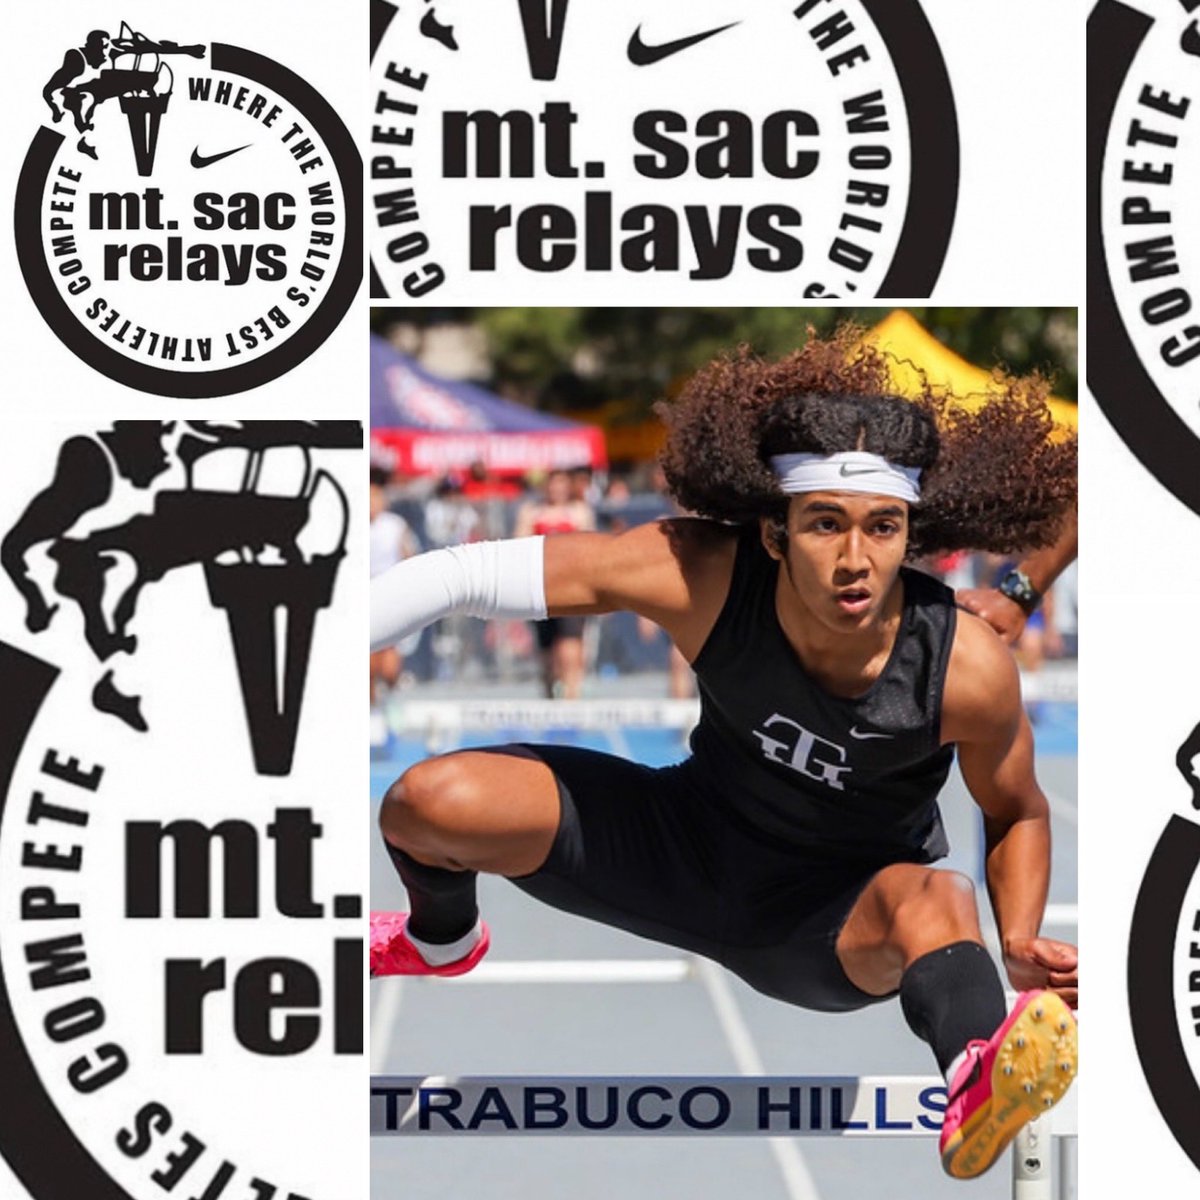 Mt. Sac Relays #110hurdles #followthejourney Dario Garrett @runnerspace @PrepCalTrack #hurdles #Godfirst #Believe